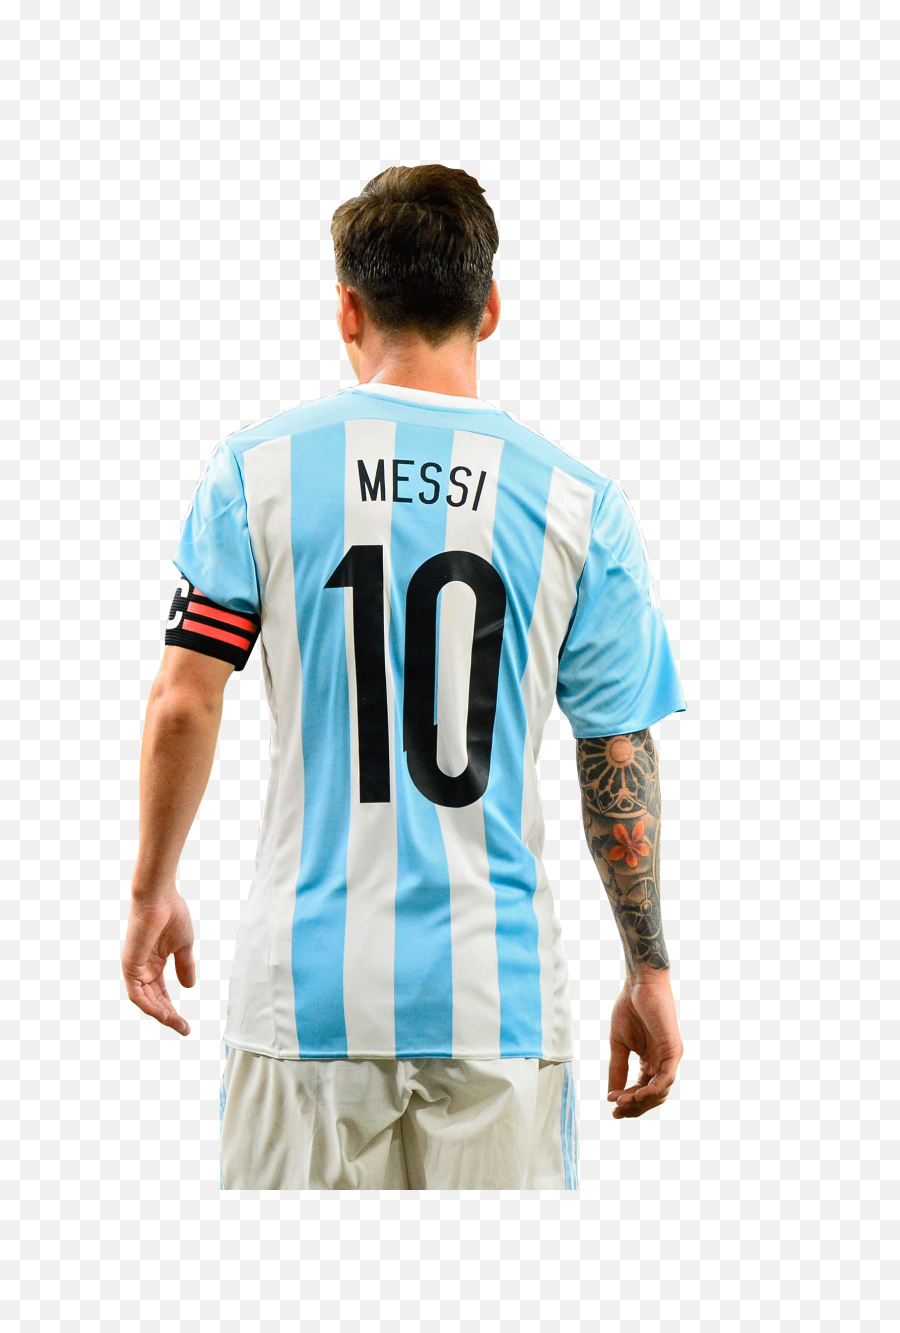 Hd Messi Png Image Free Download - Messi Png,Messi Transparent